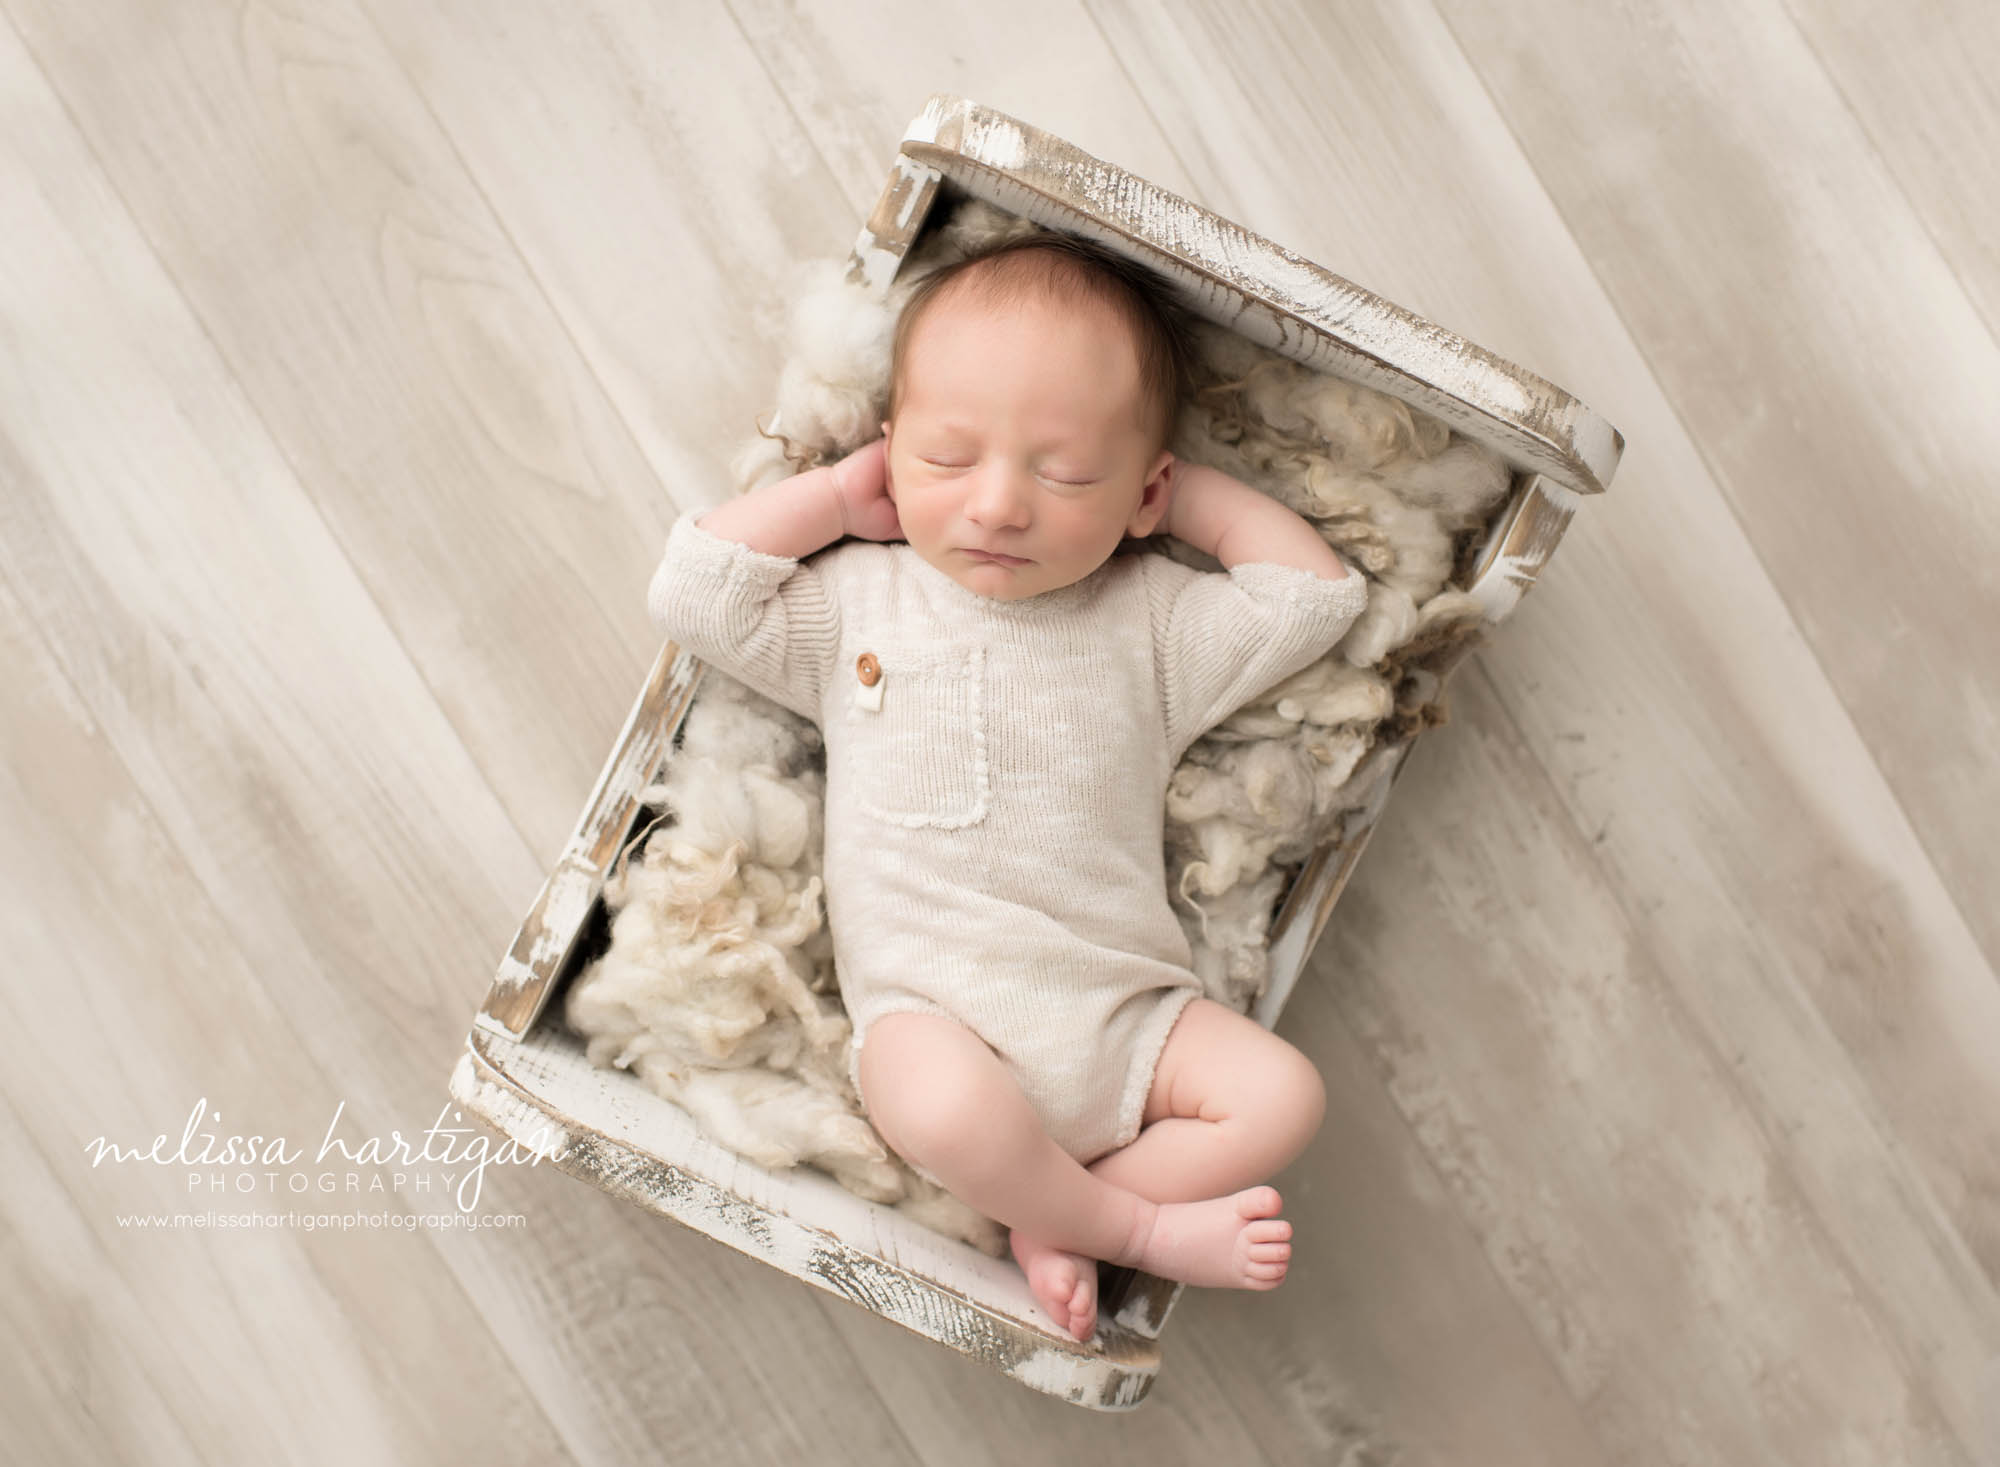 Newborn Photographer Connecticut newborn pose baby sleeping in wooden white bed 